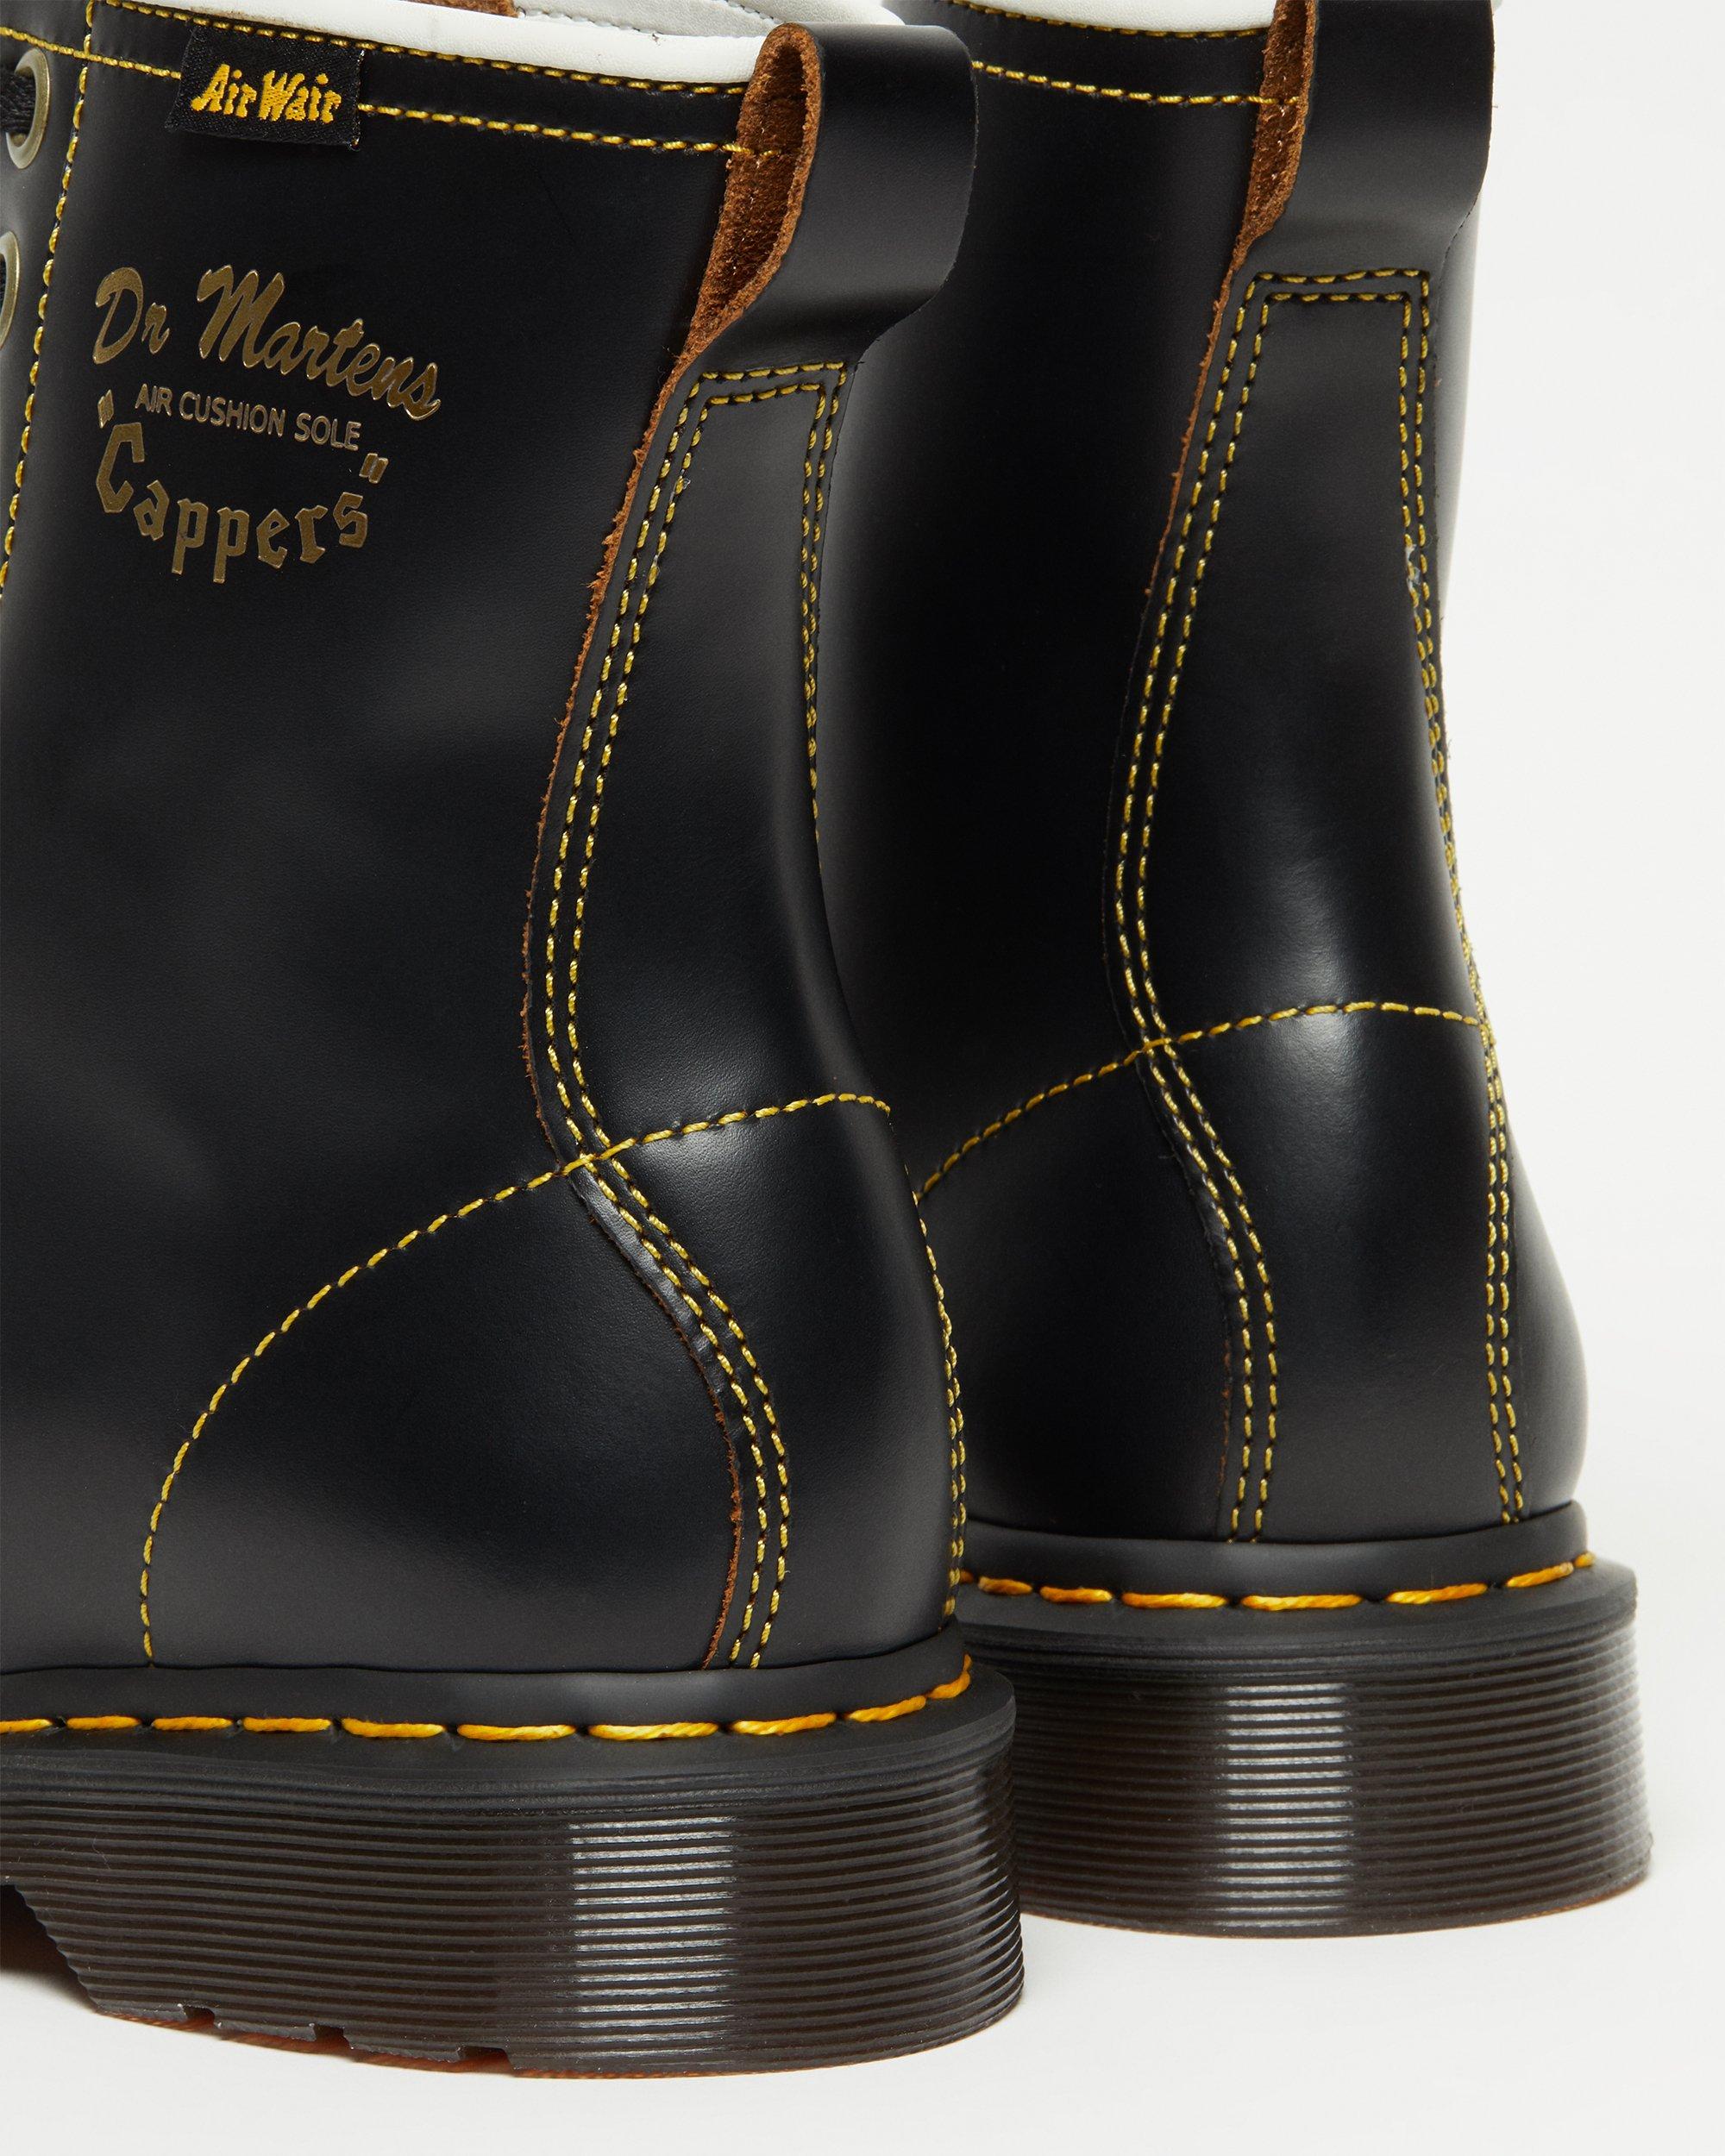 https://i1.adis.ws/i/drmartens/16058001.87.jpg?$large$Capper Vintage Smooth Leather Boots Dr. Martens